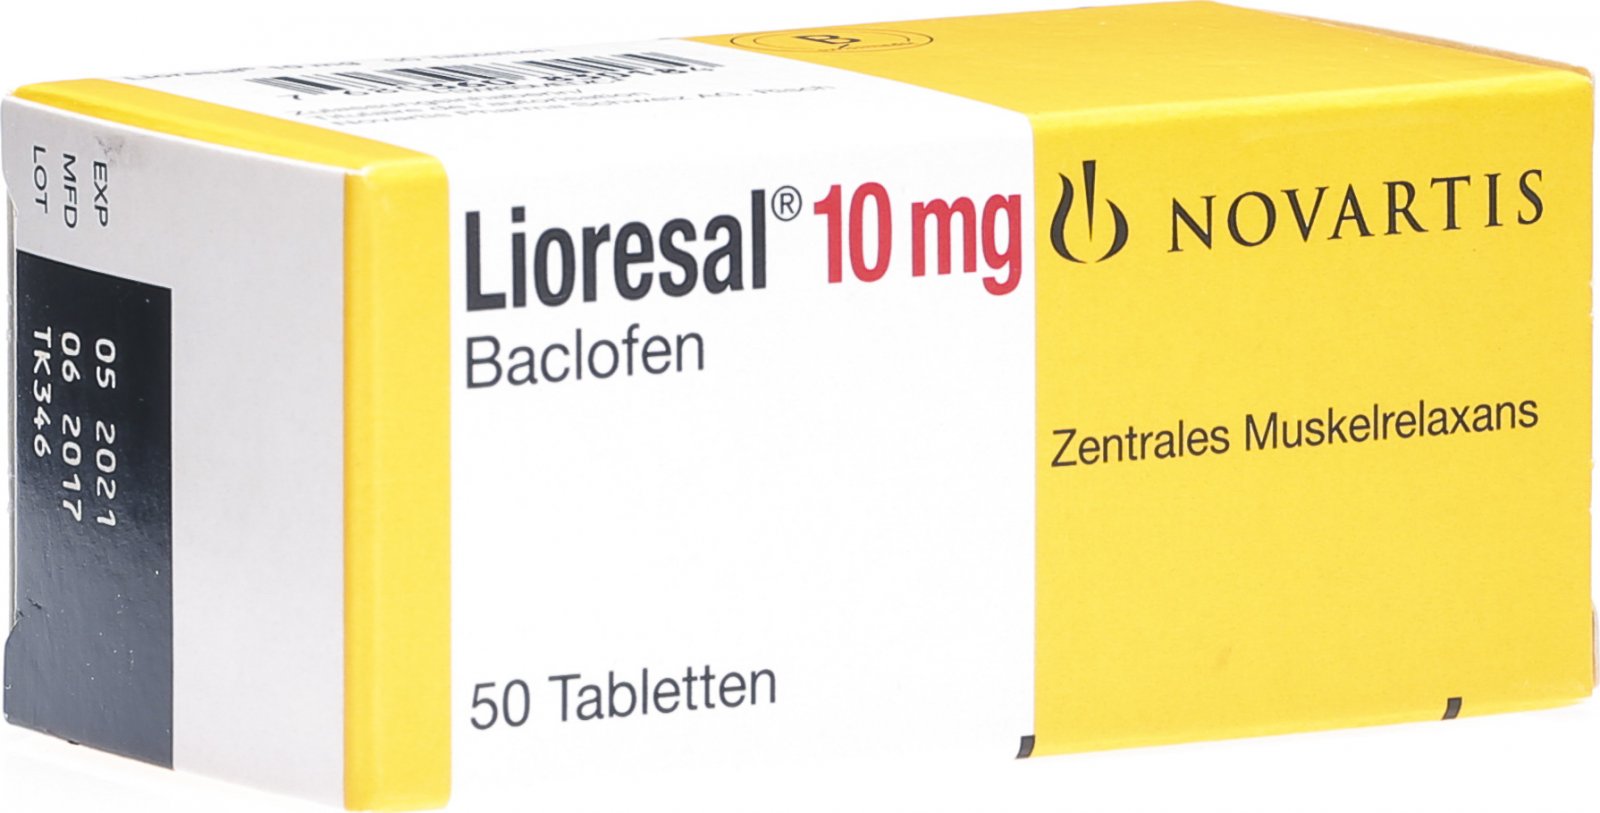 Lioresal Tabletten 10mg 50 Stuck In Der Adler Apotheke